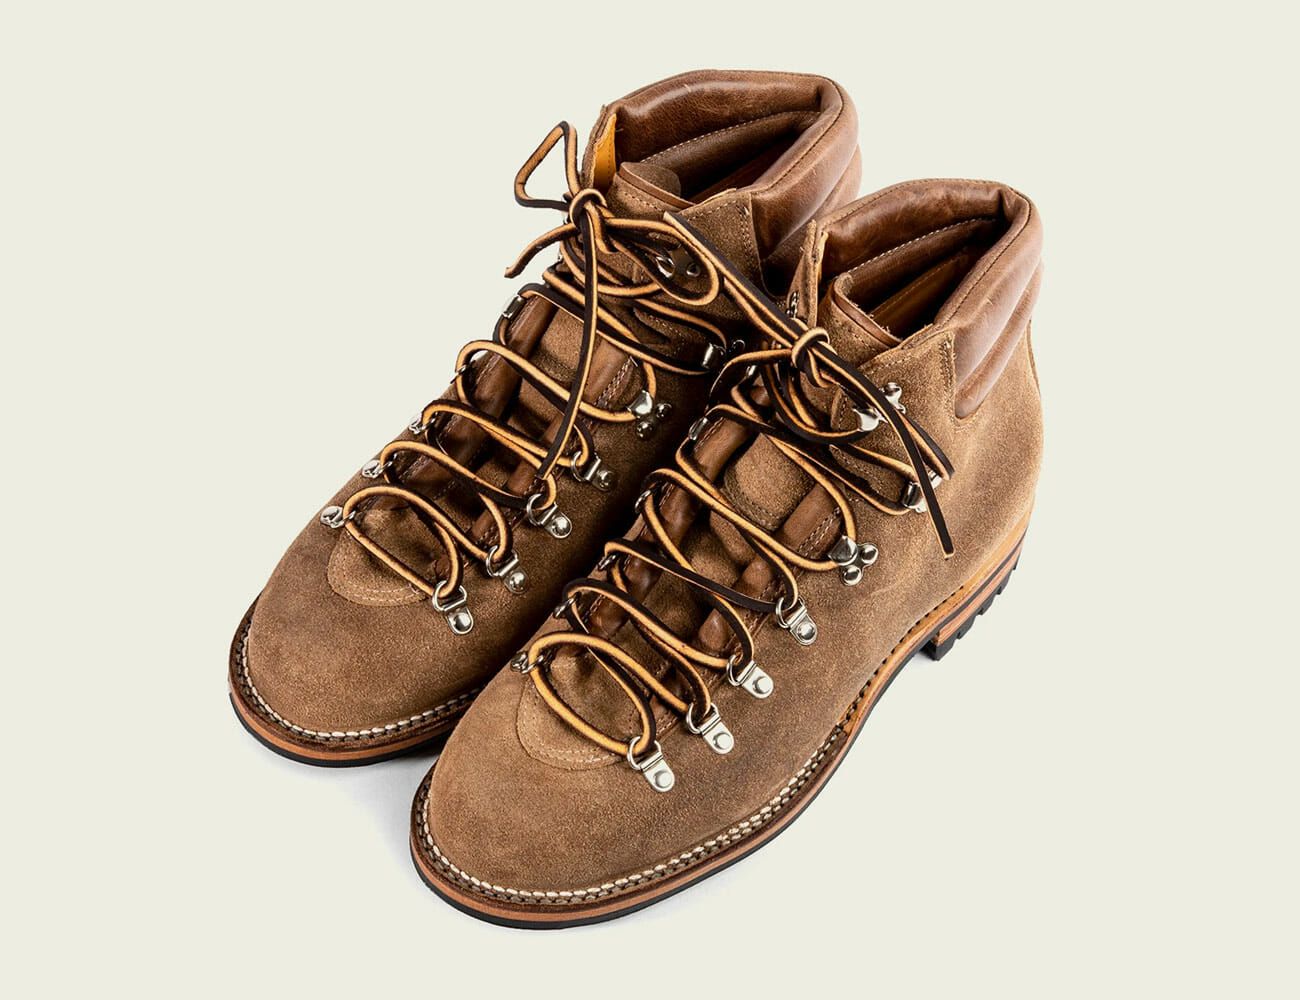 viberg hiking boots